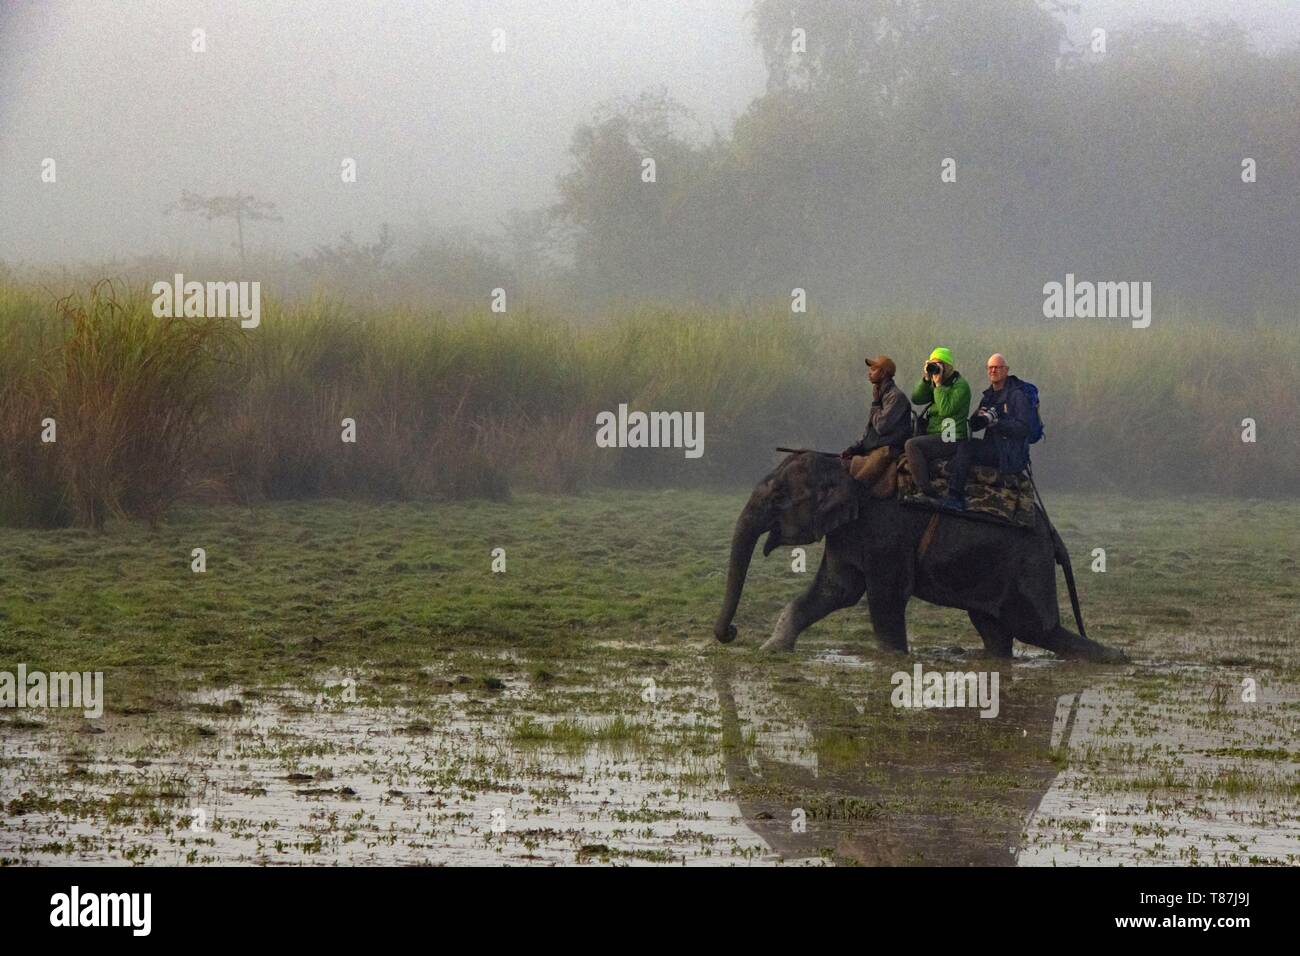 India, Assam, Kaziranga, unicorne rinoceronti prenotazione Foto Stock